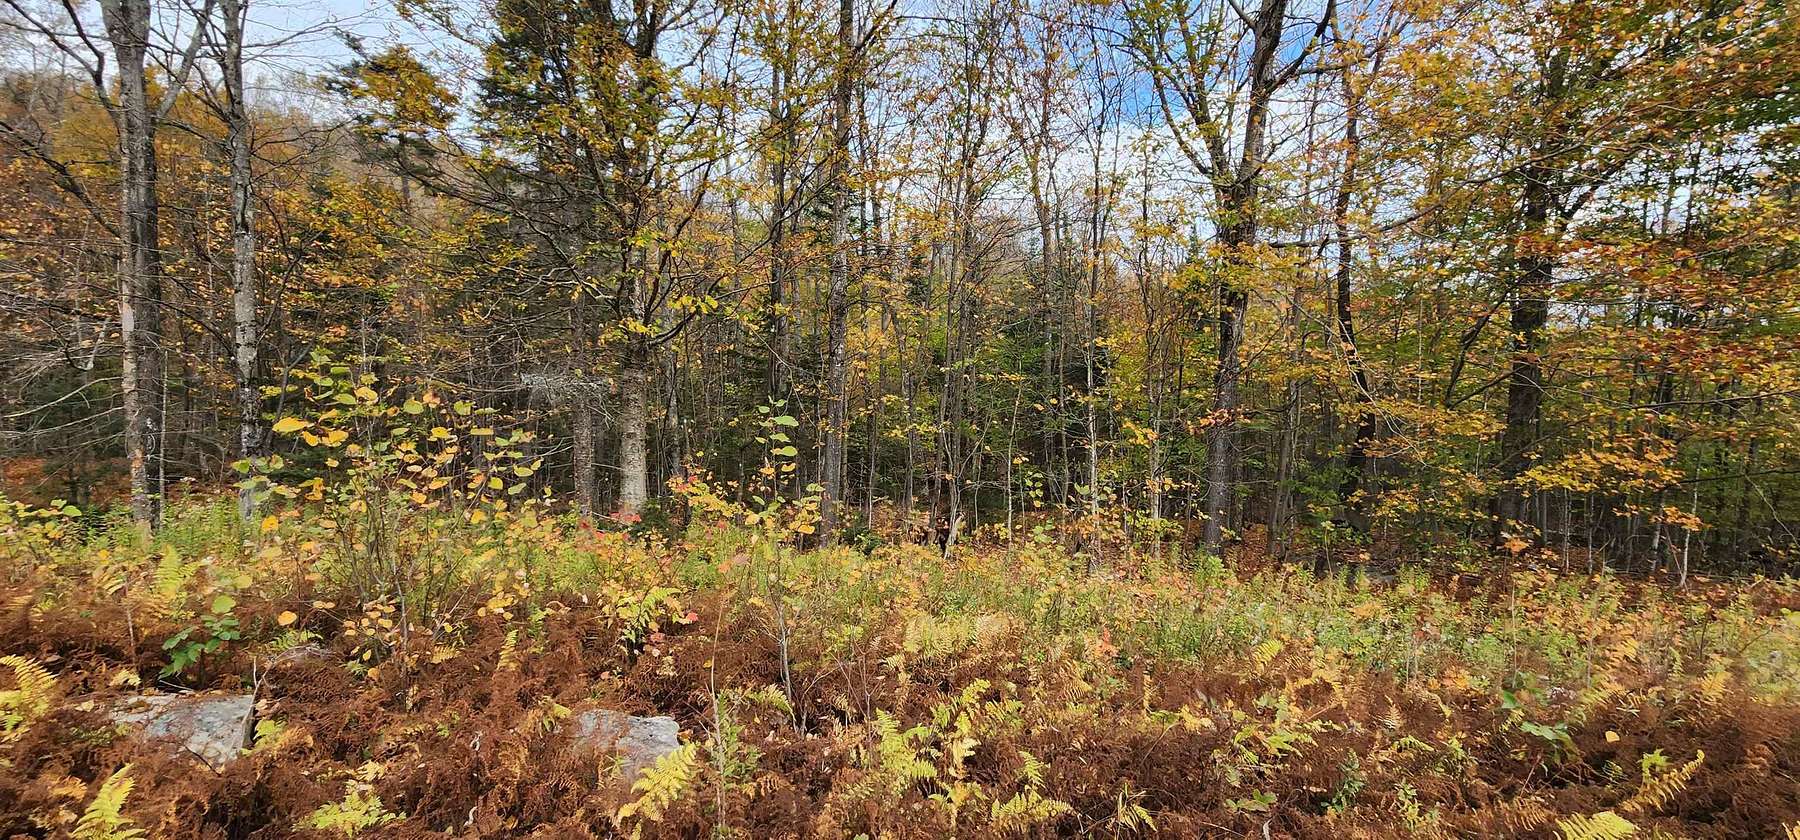 31 Acres of Land for Sale in Orange, Vermont